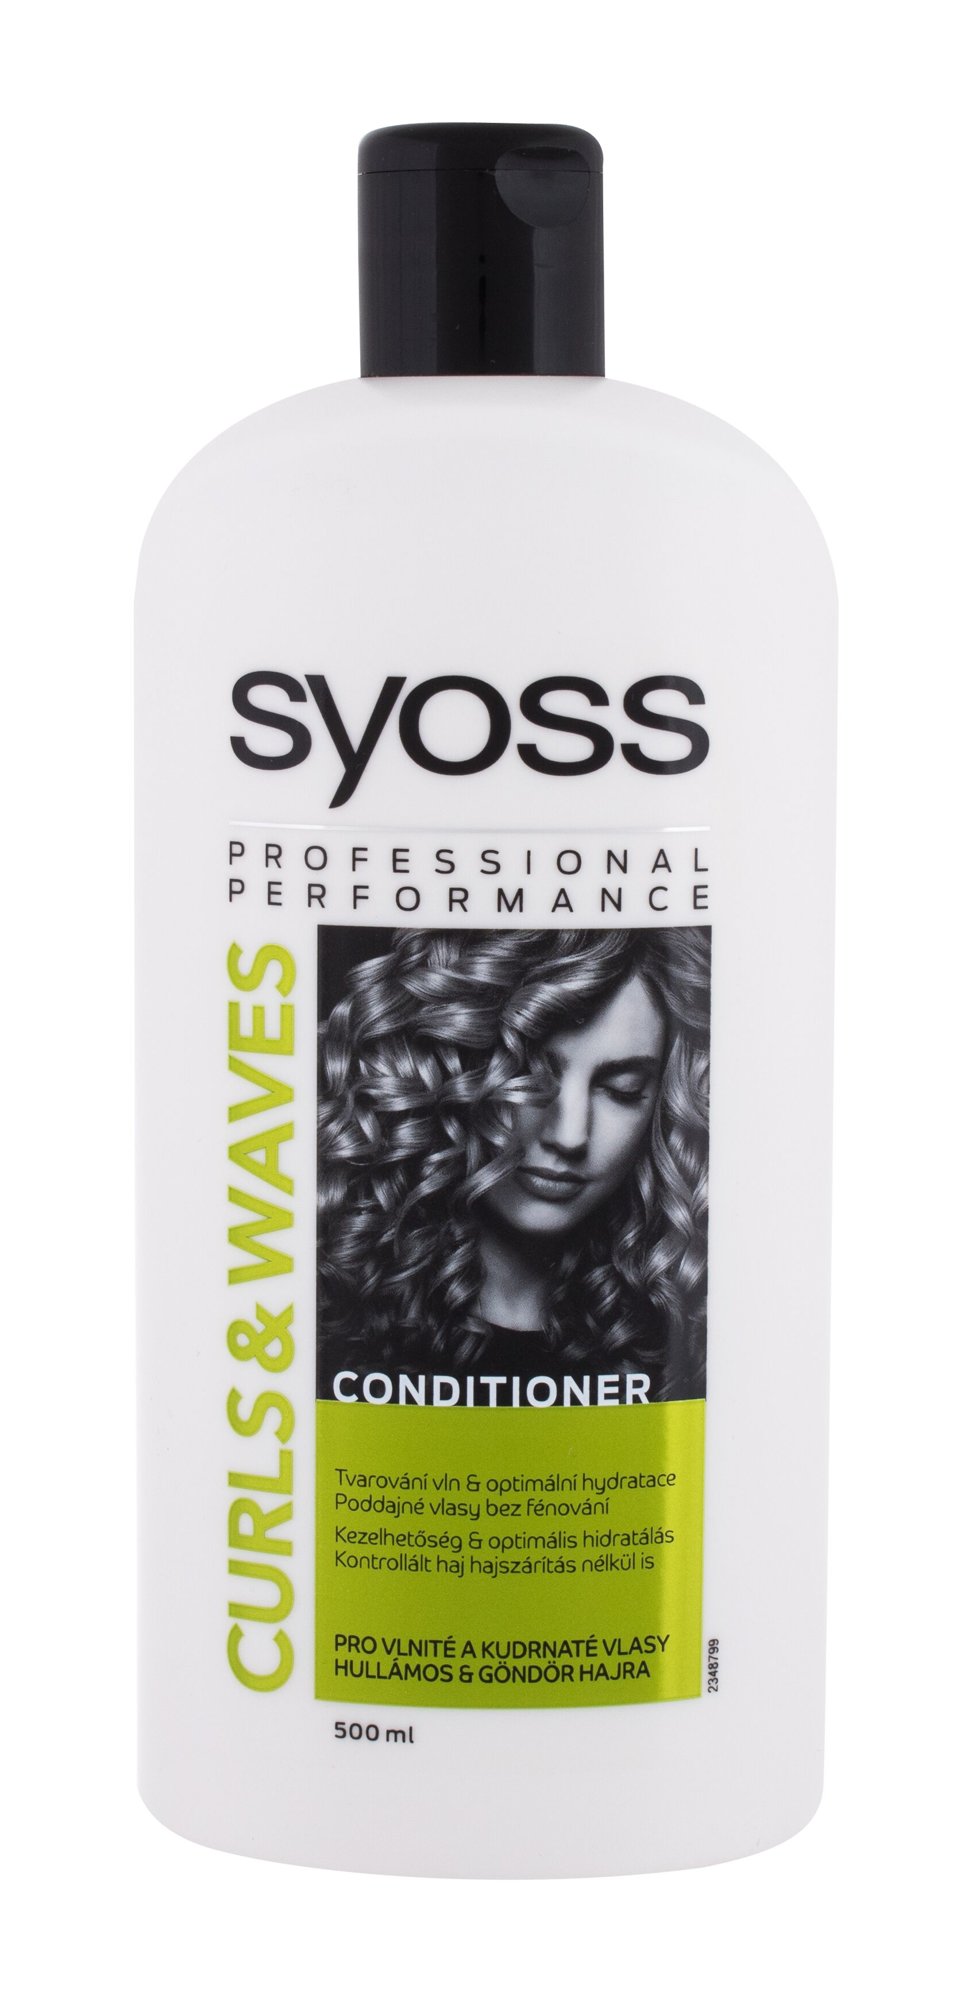 Syoss Professional Performance Curls & Waves 500ml kondicionierius